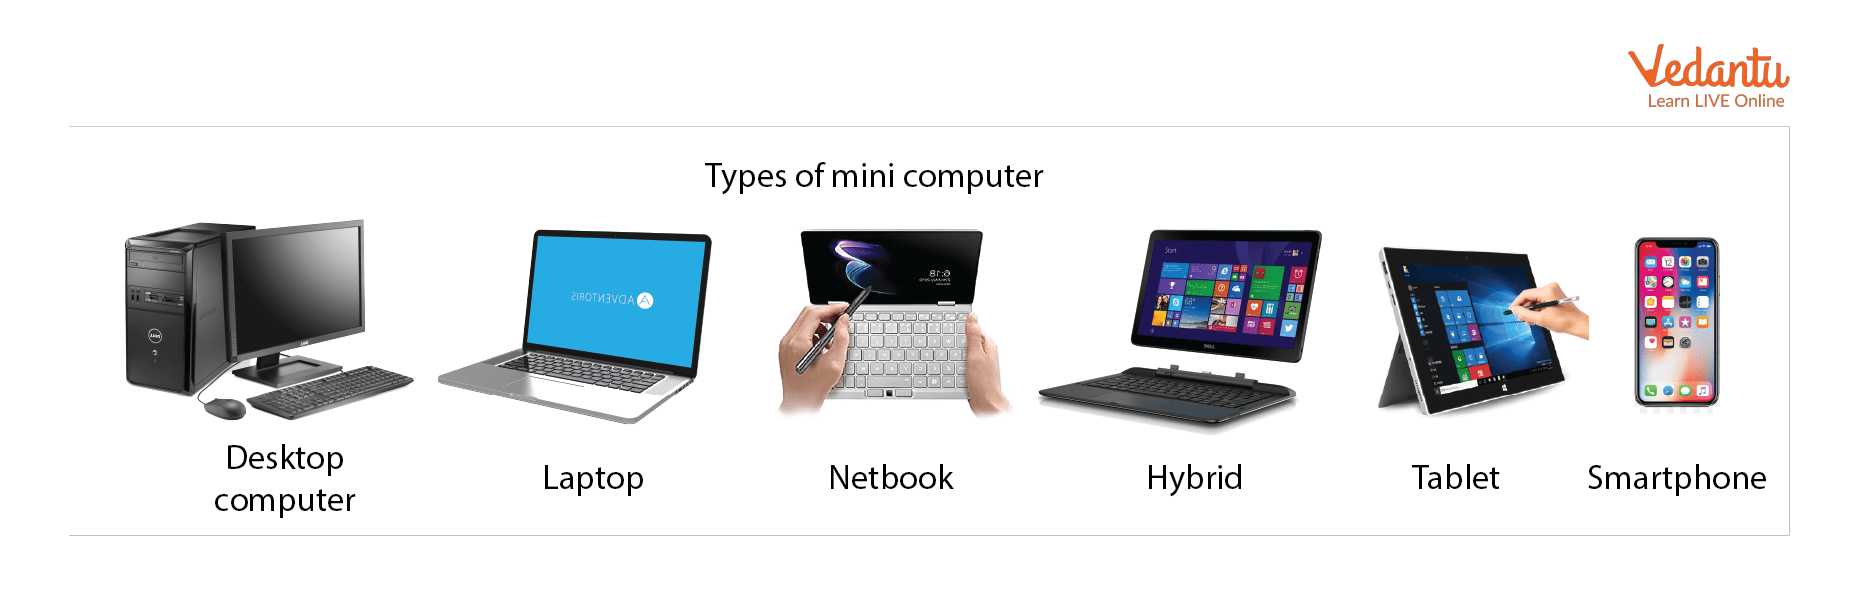 Types of Mini Computers